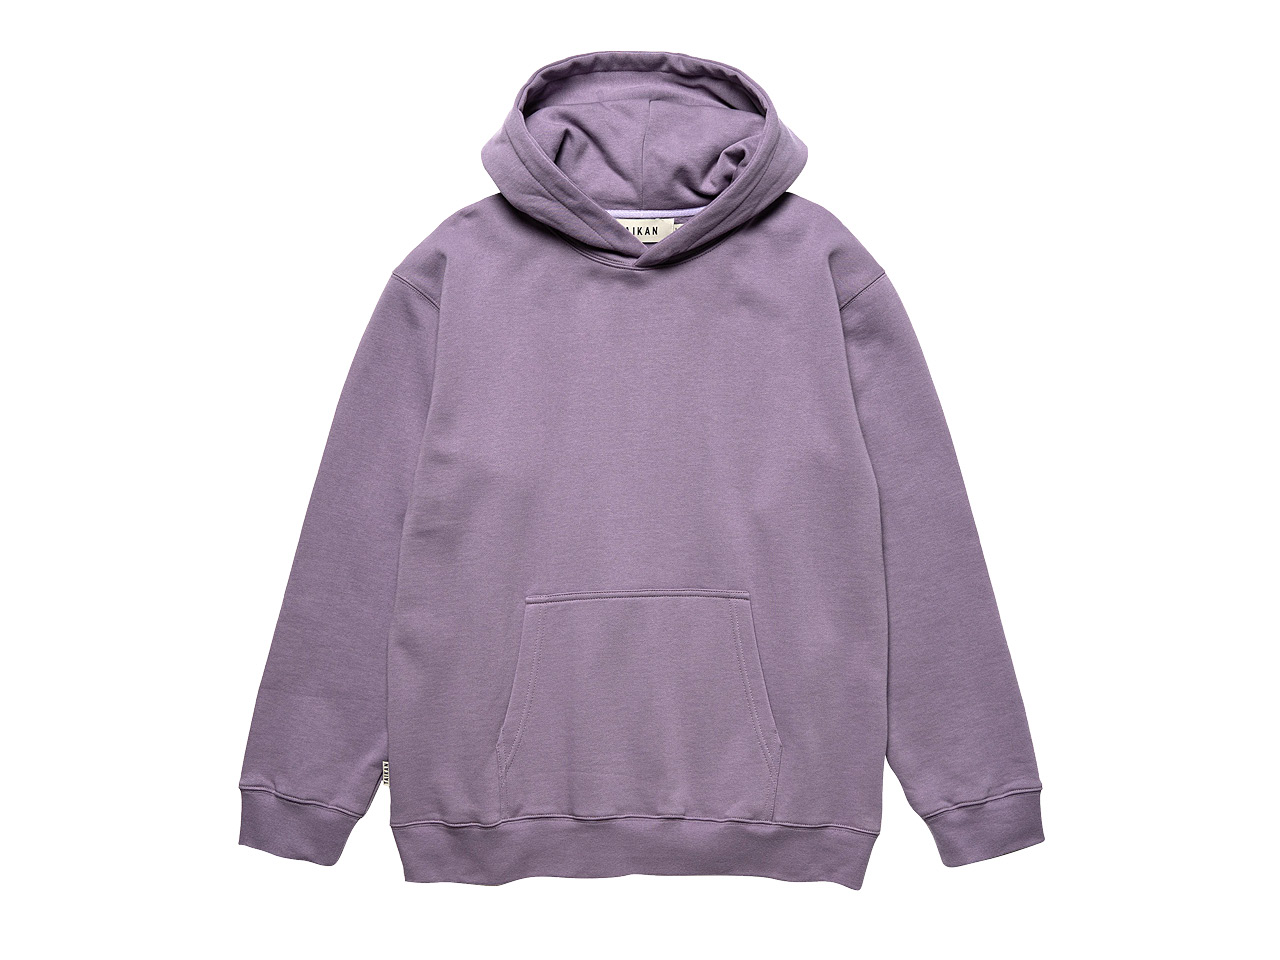 Plain purple hoodie.